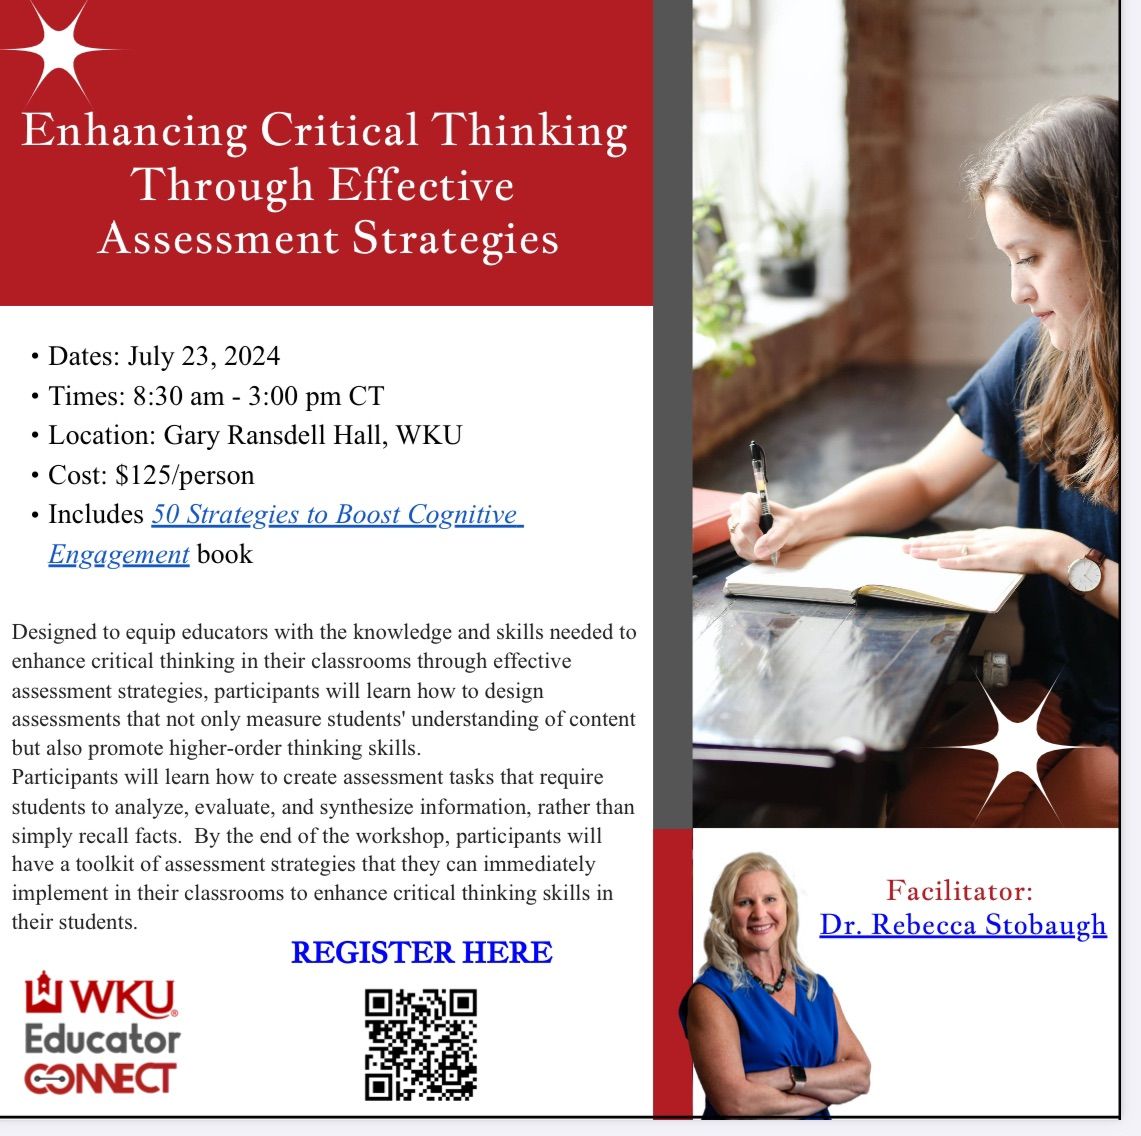 Enhancing Critical Thinking Through Assessment Strategies 